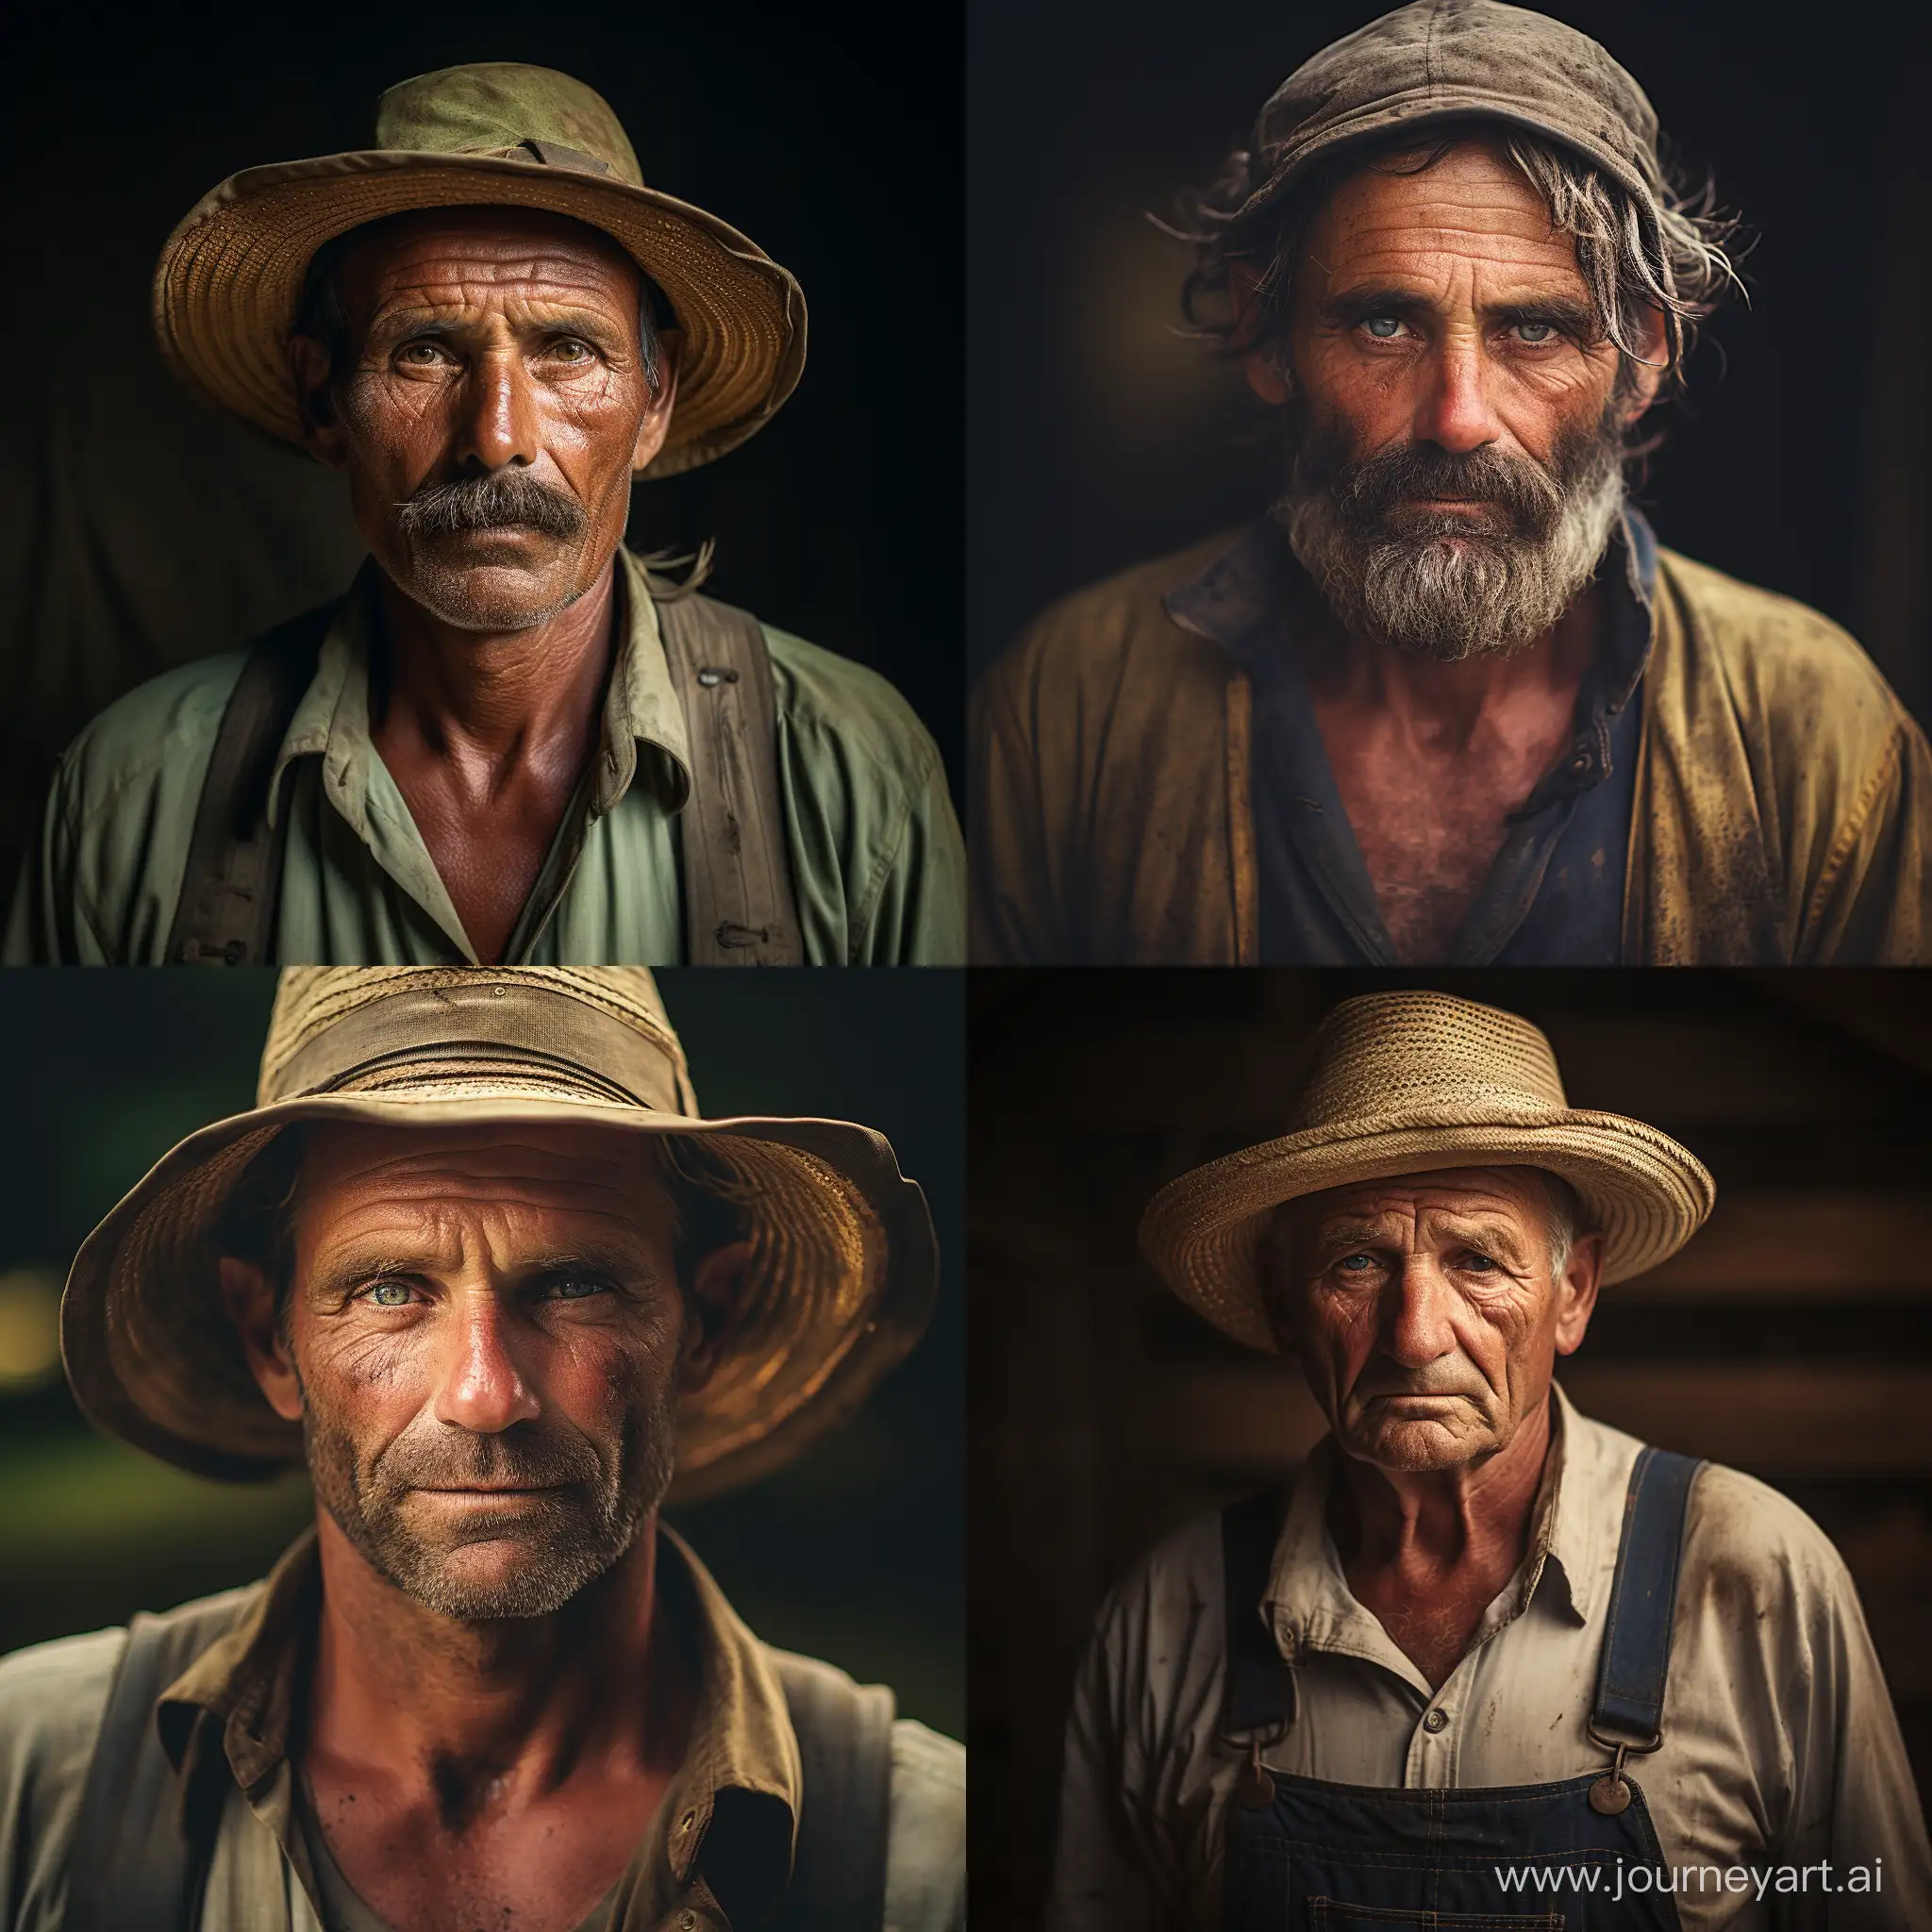 Portrait of a farmer, DSLR.